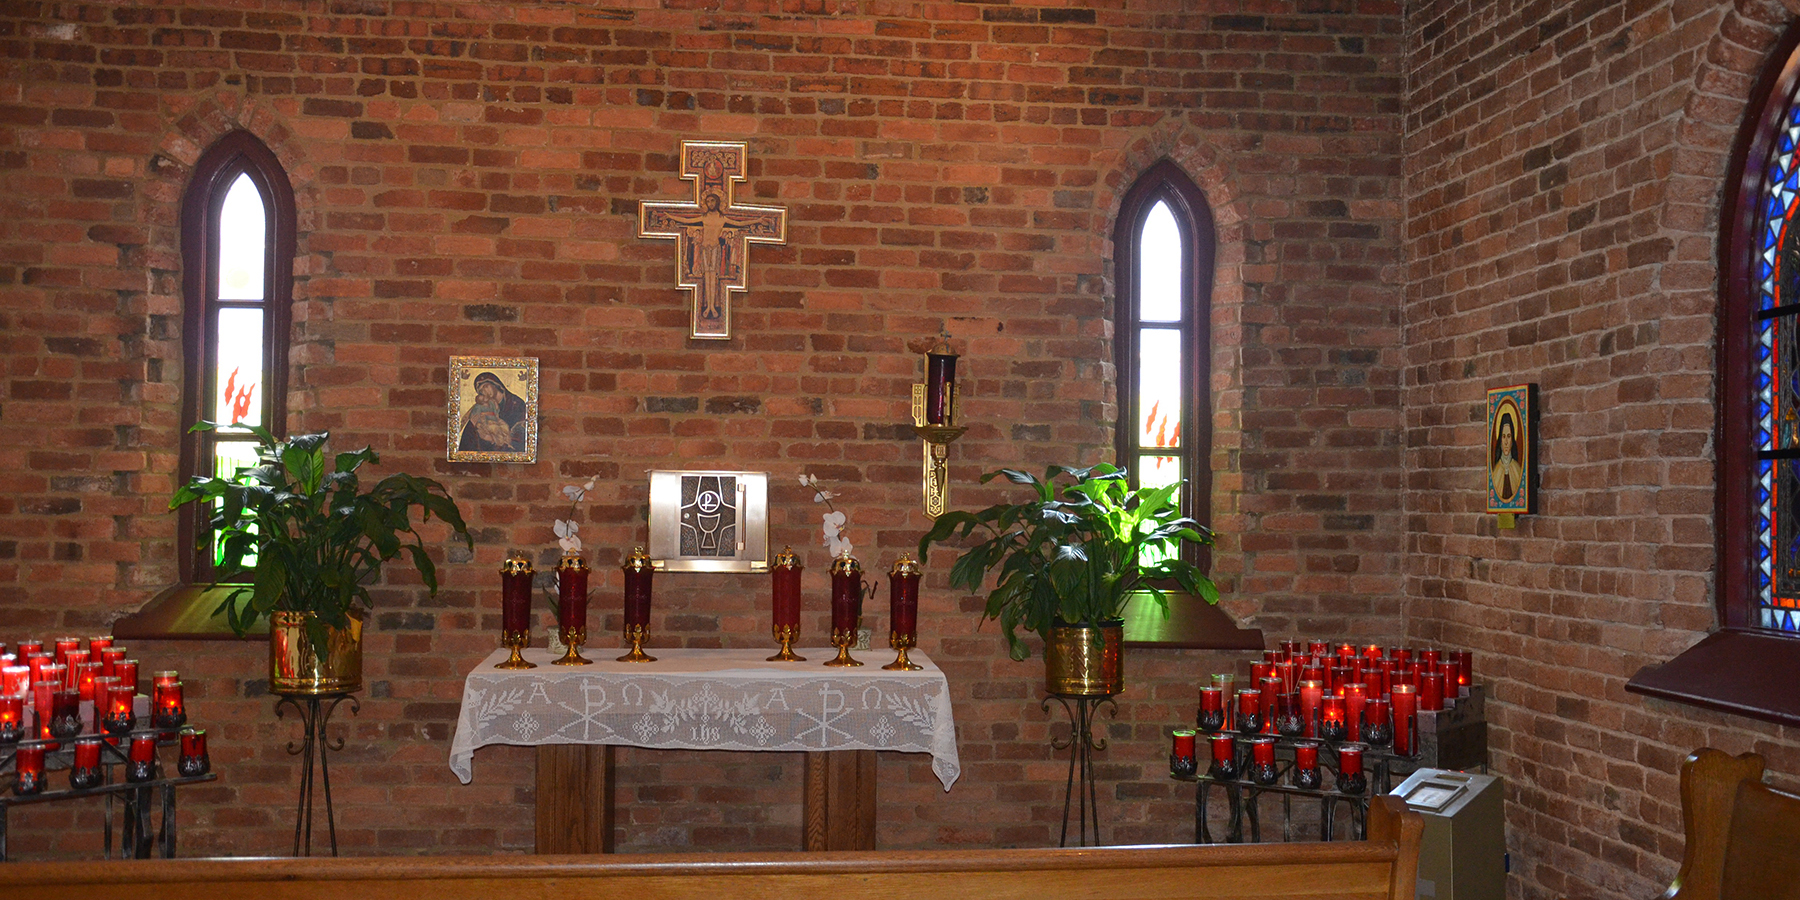 The Adoration Chapel at St. Francis